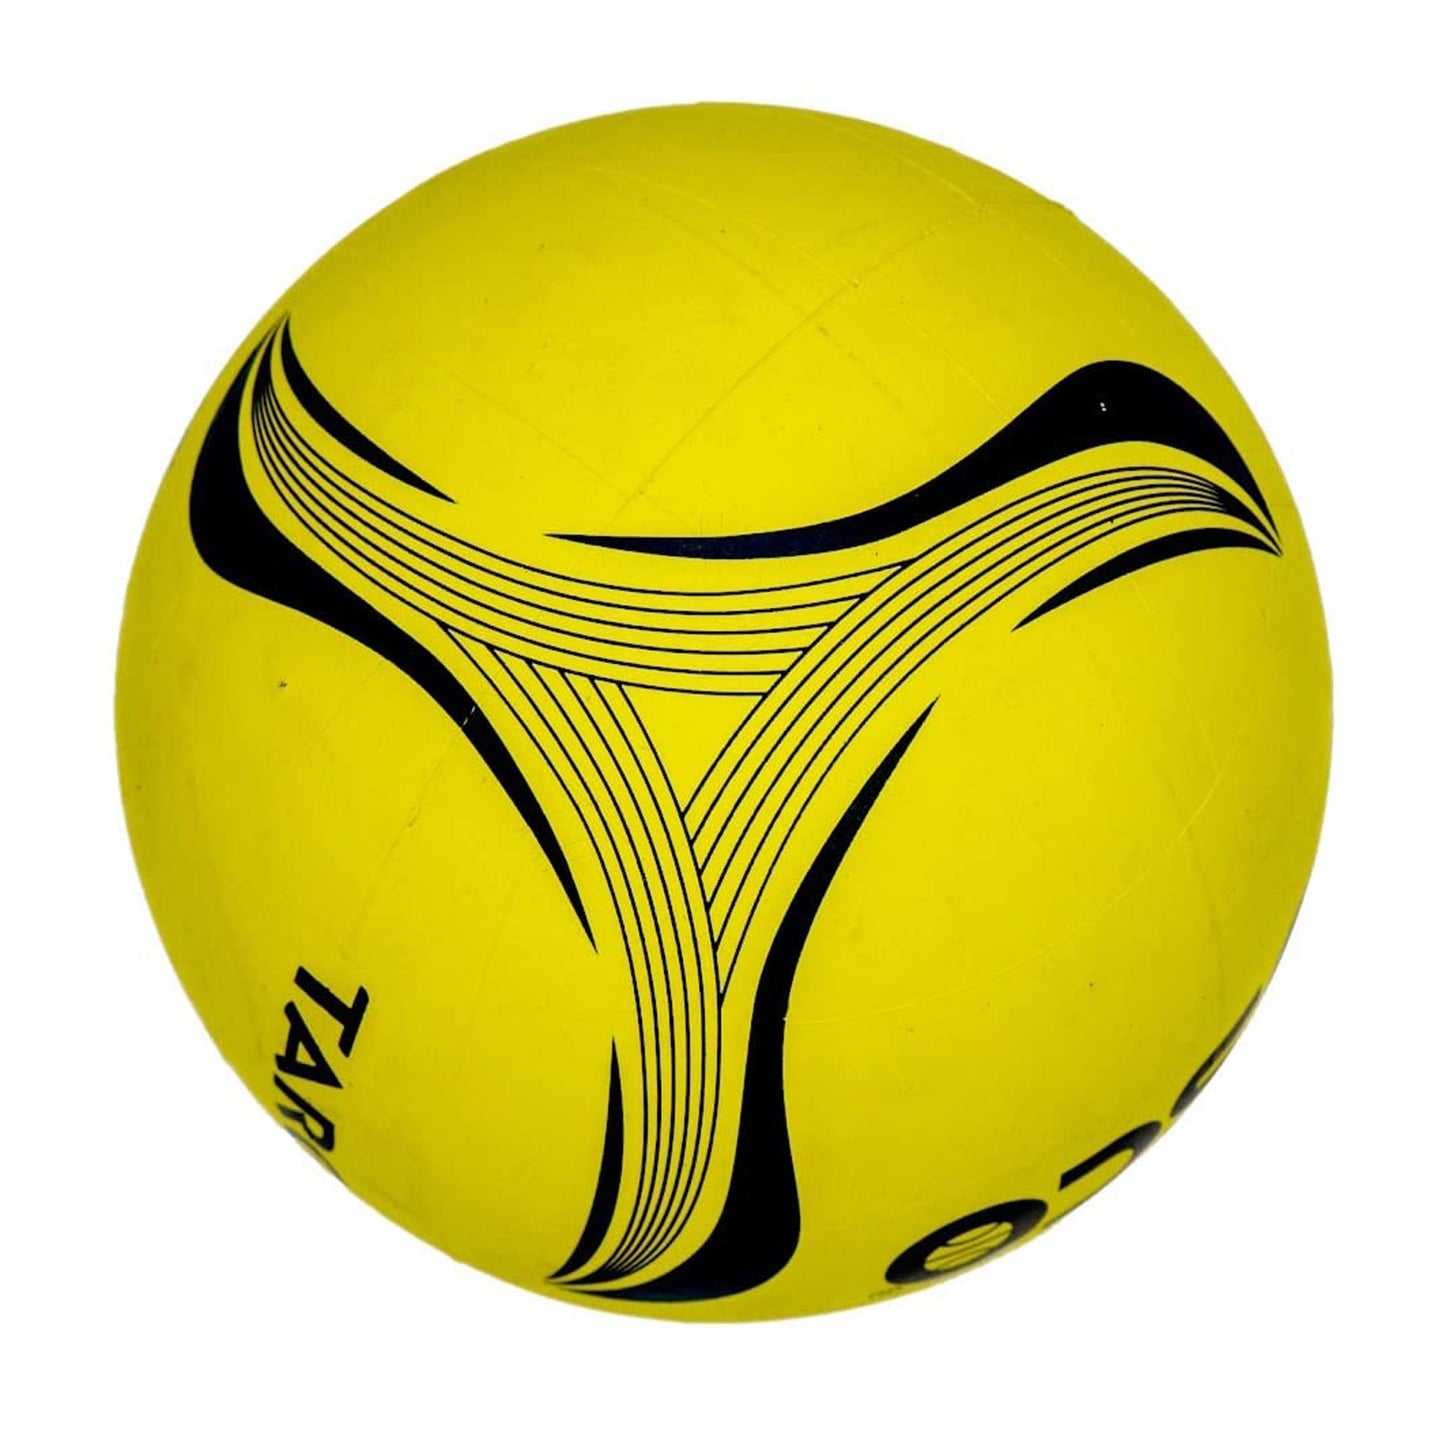 Cosco Target Volleyball, Yellow (Size 4) - Best Price online Prokicksports.com